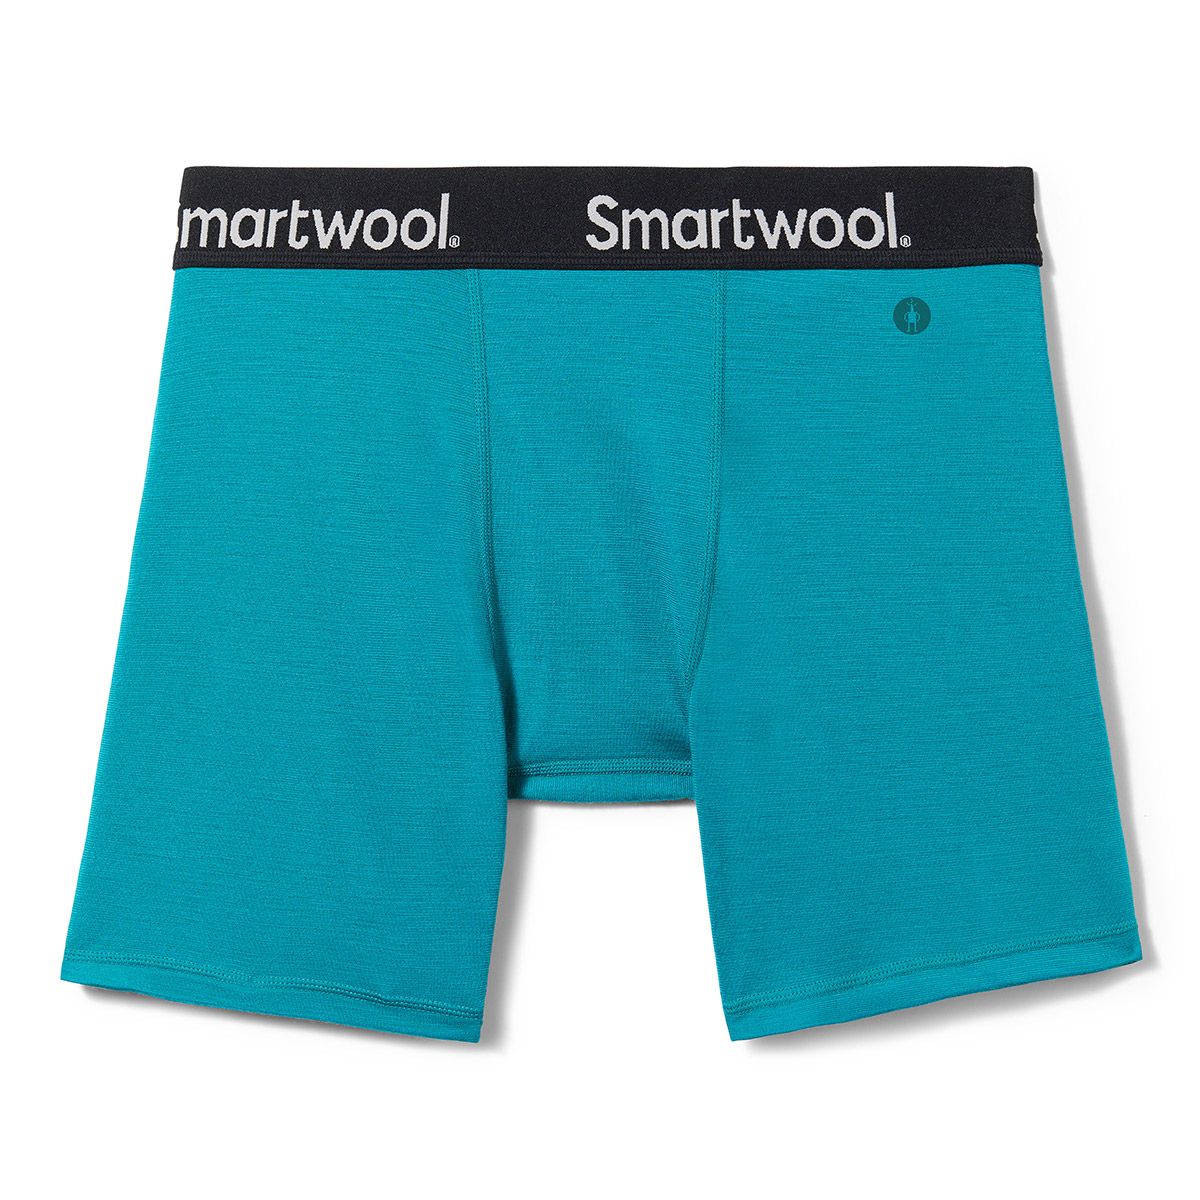 Smartwool - Merino 150 Boxer Brief Boxed